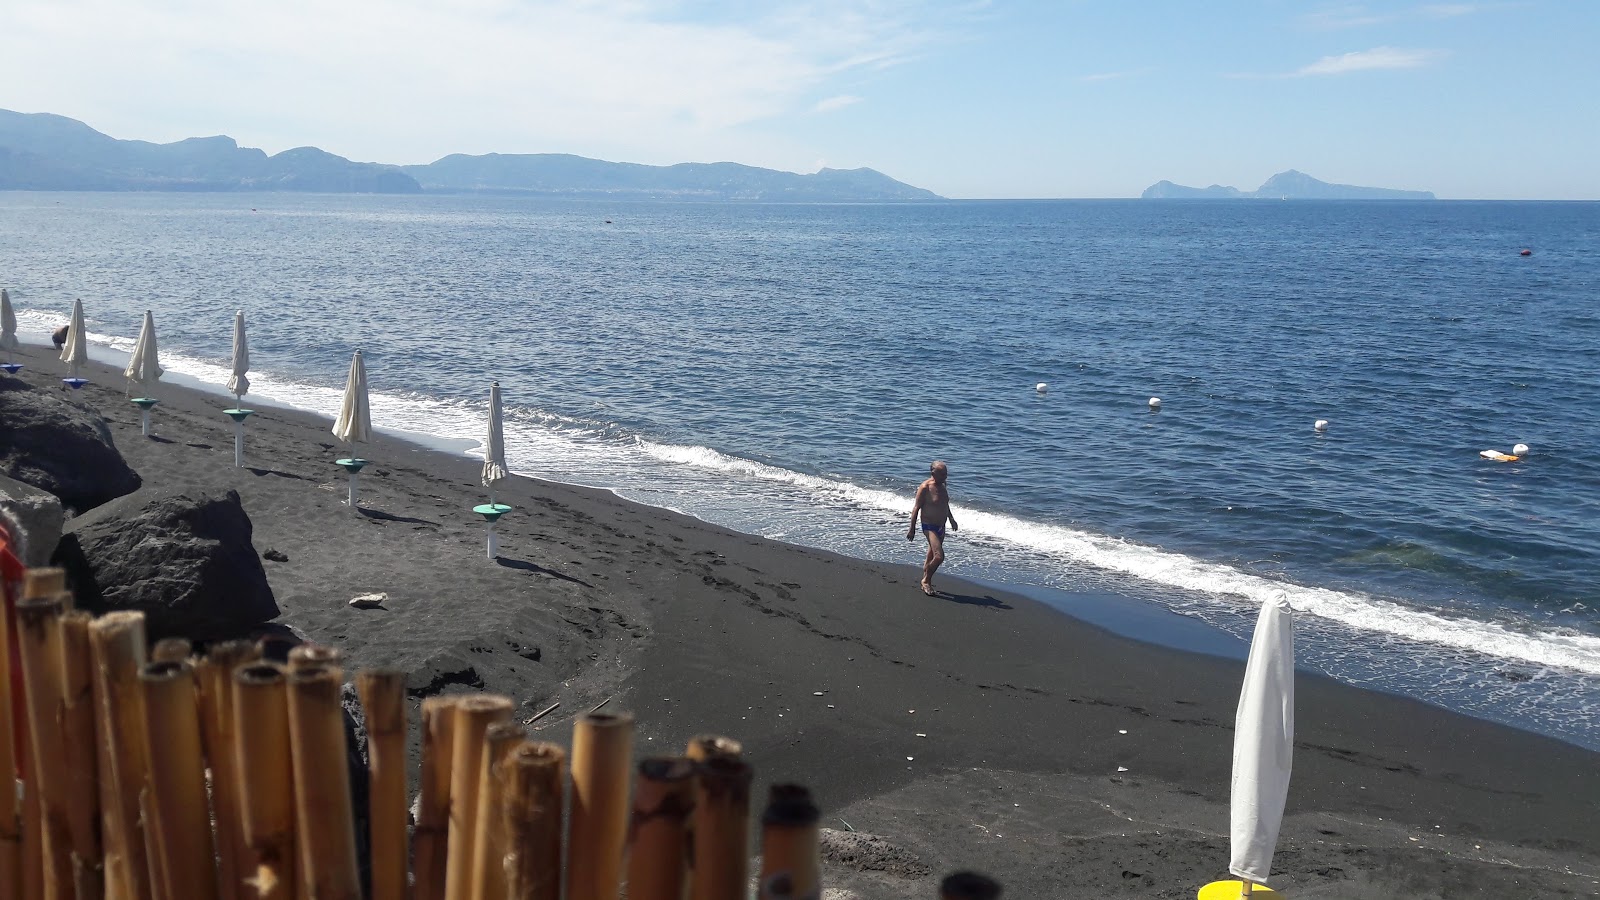 Foto von Spiaggia di via Litoranea mit blaues wasser Oberfläche